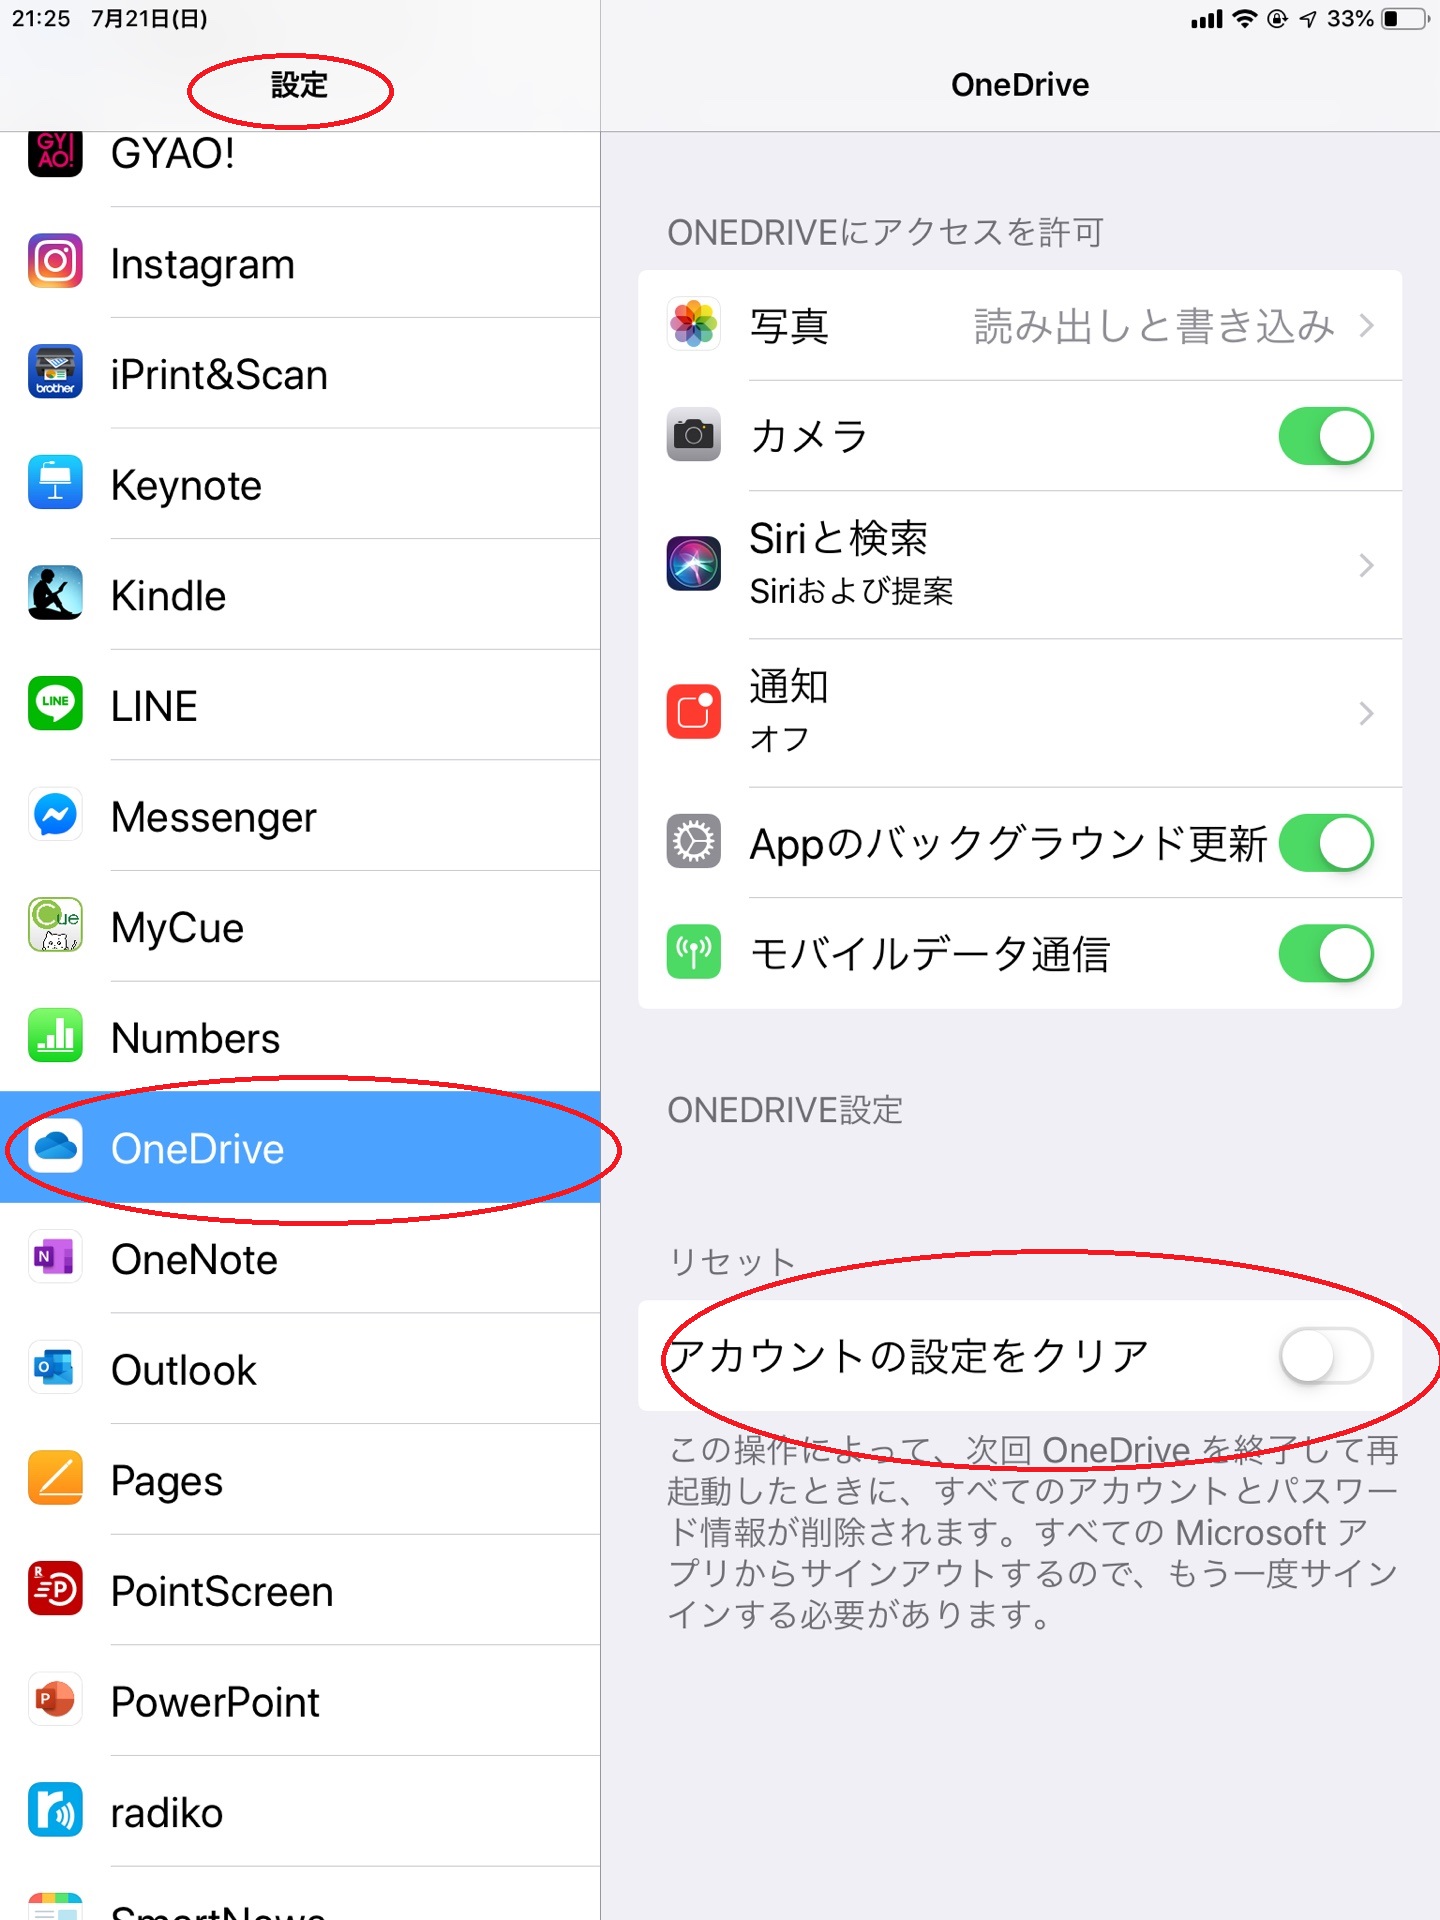 OneDrive for iOSからのアカウント情報削除 - Microsoft コミュニティ